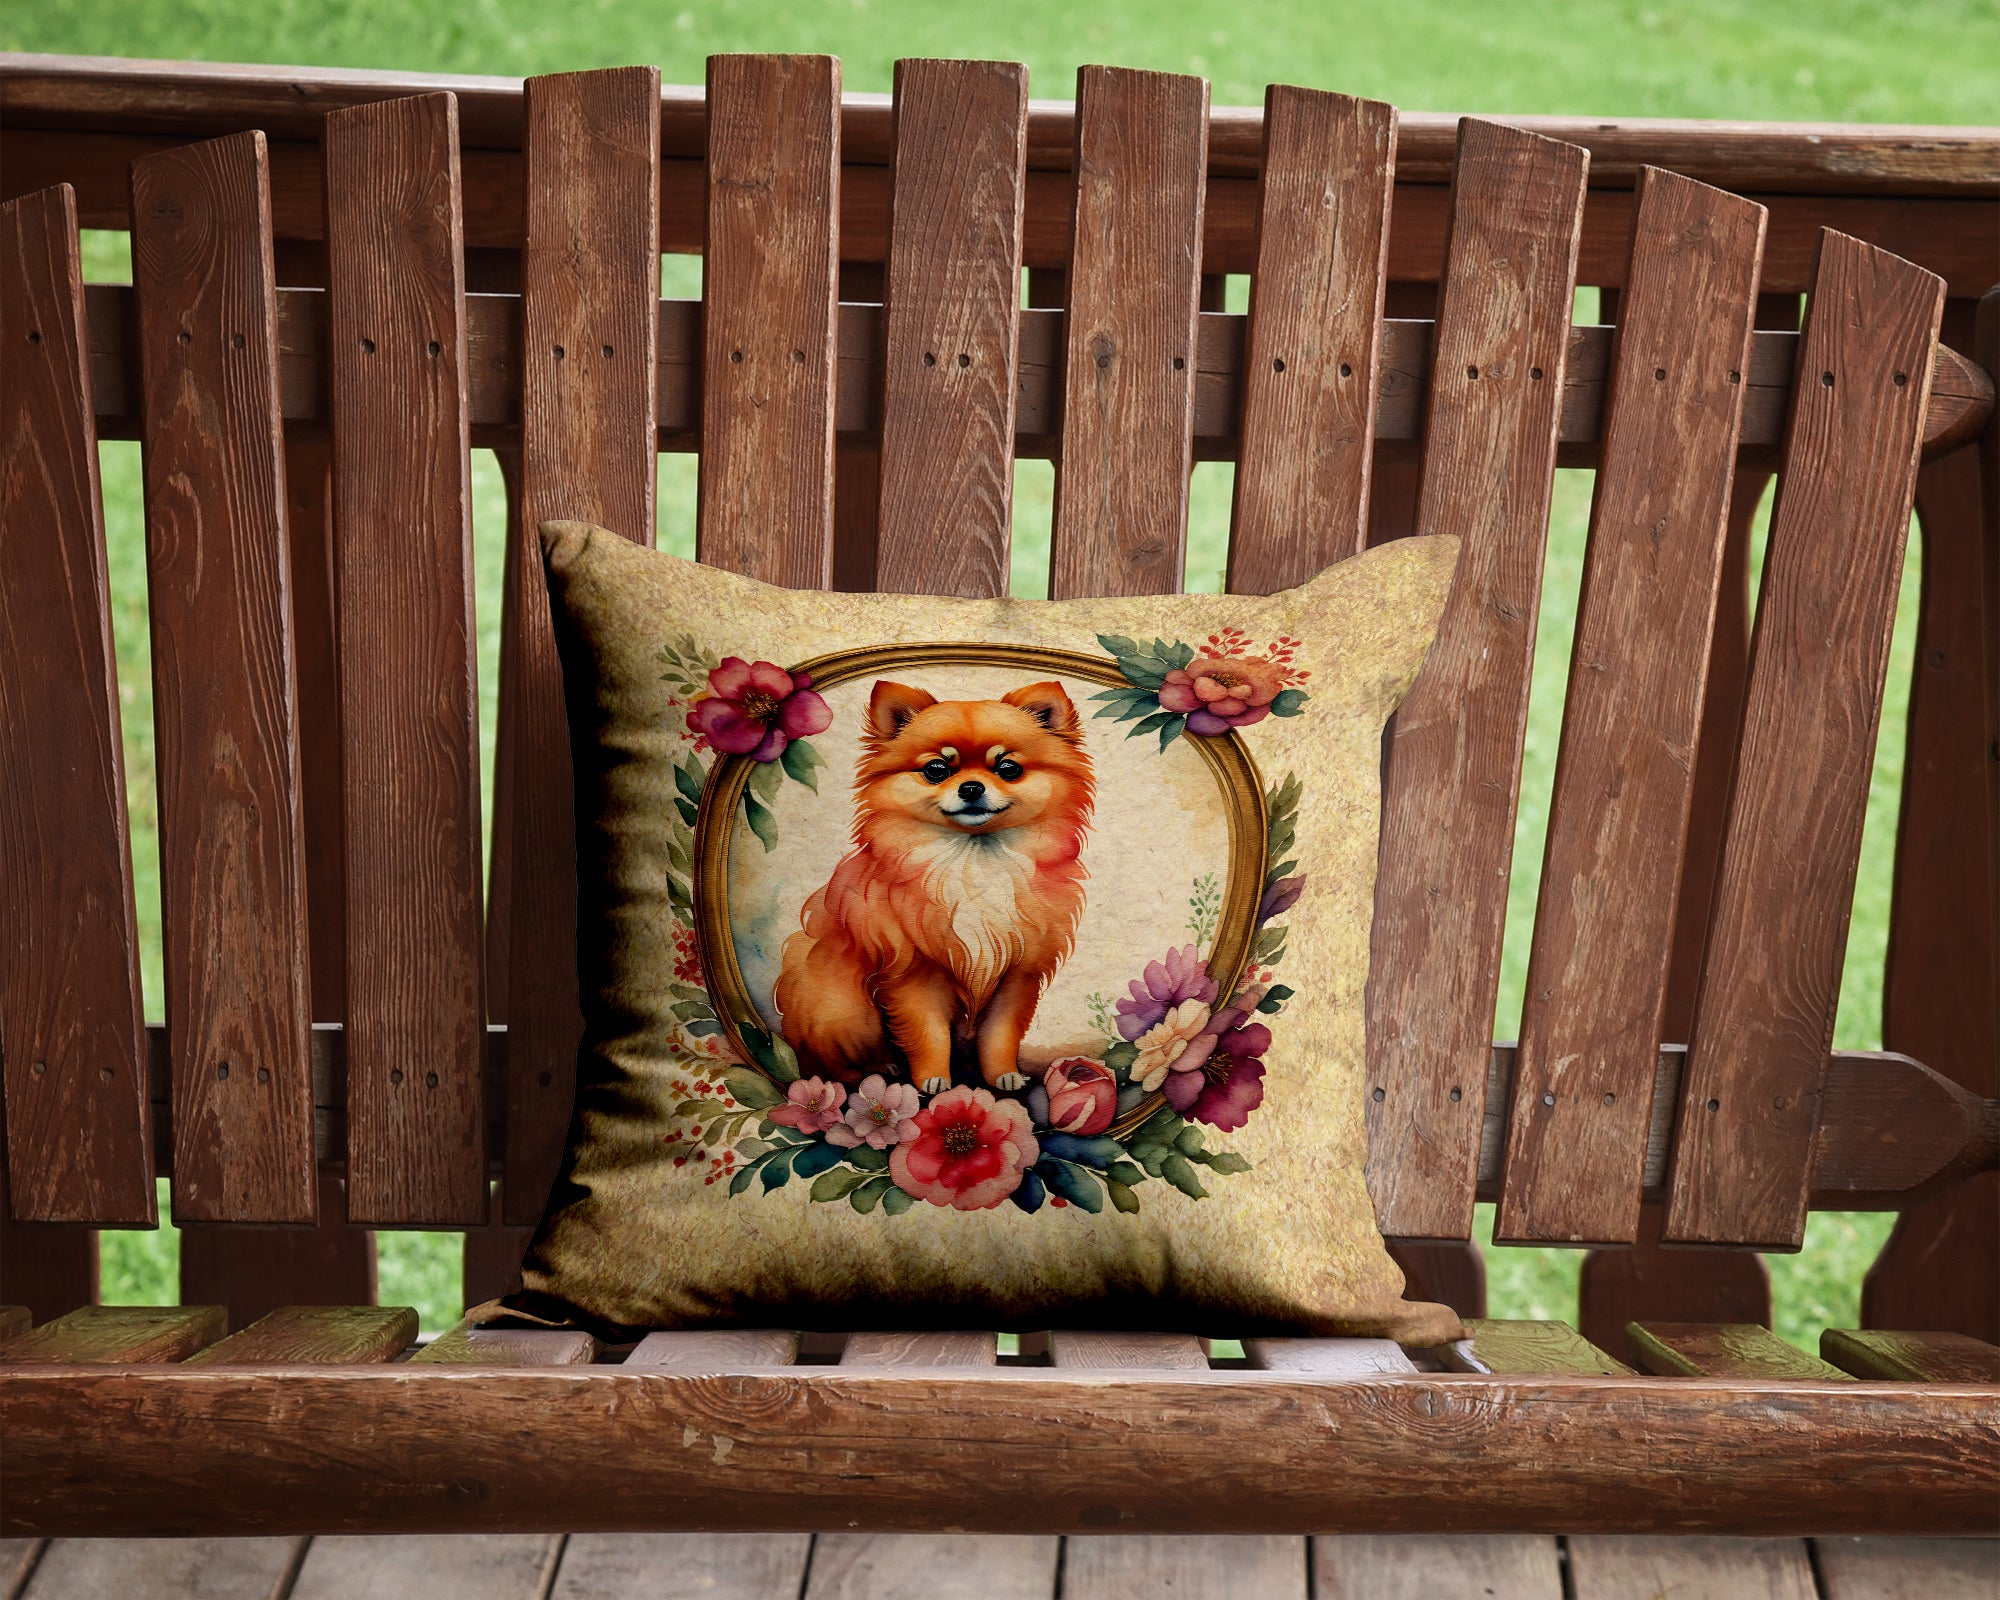 Pomeranian and Flowers Fabric Decorative Pillow